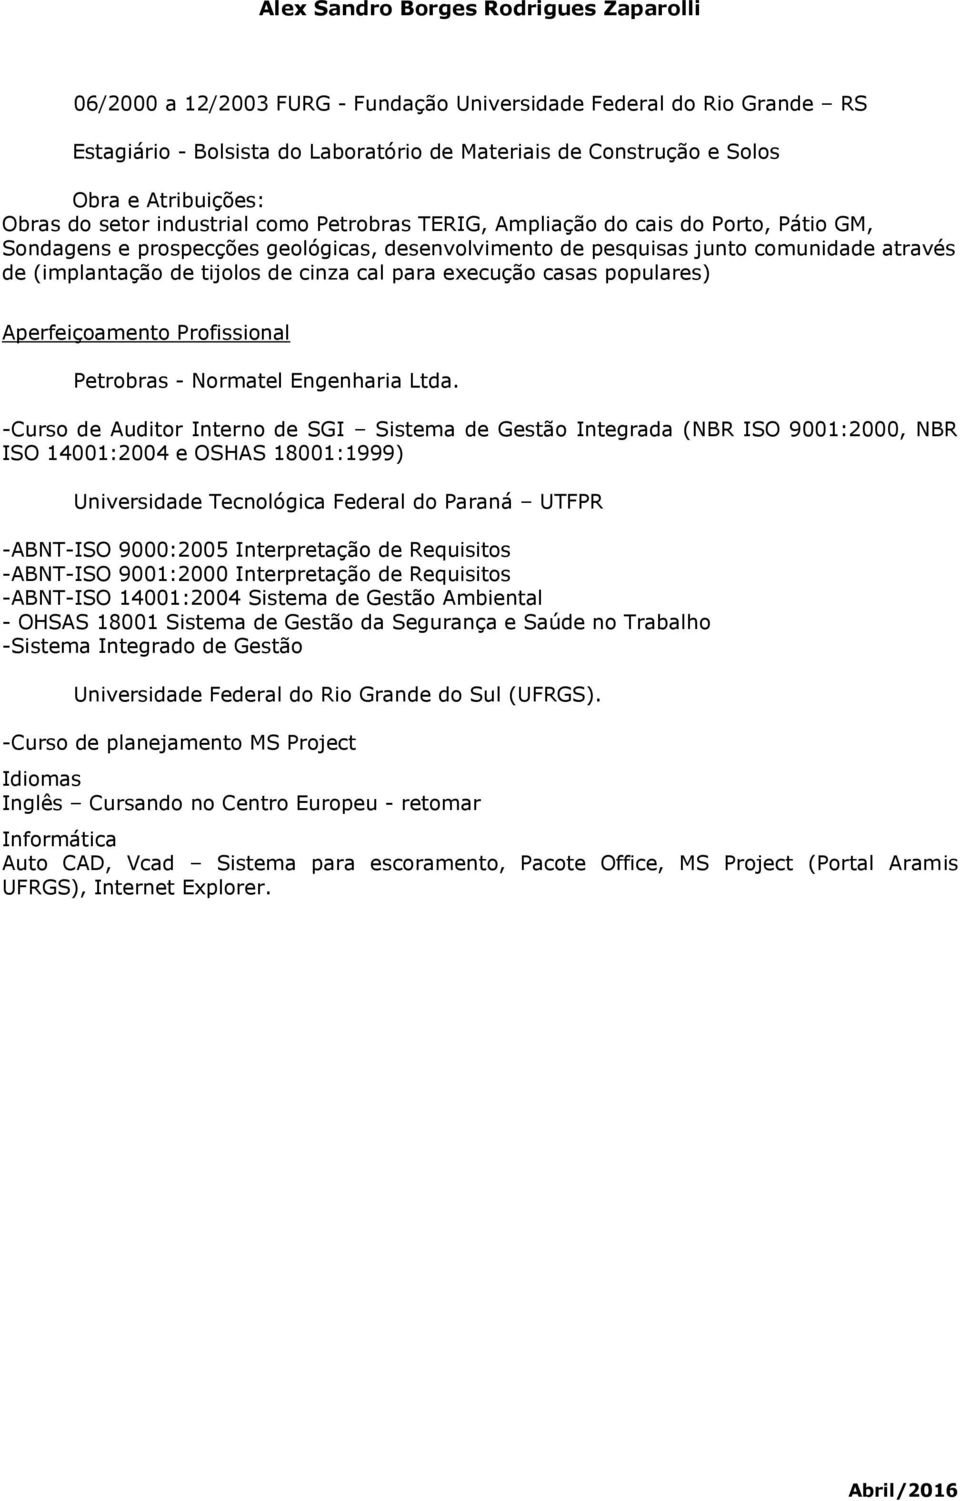 Aperfeiçoamento Profissional Petrobras - Normatel Engenharia Ltda.